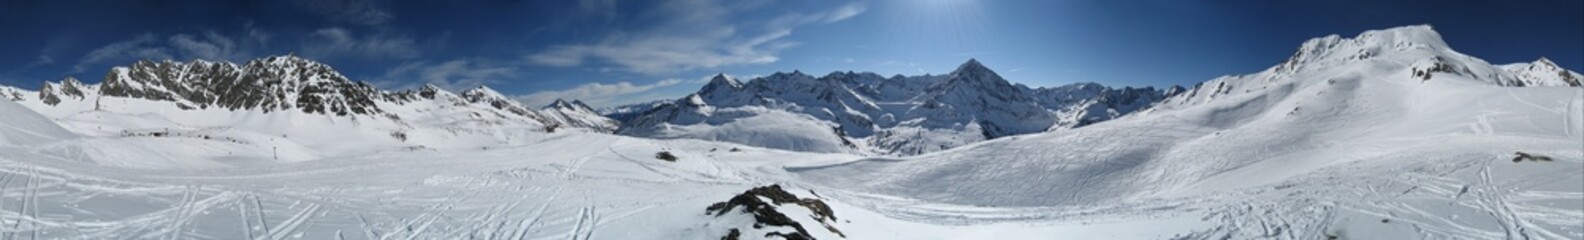 Winterpanorama aus Tirol